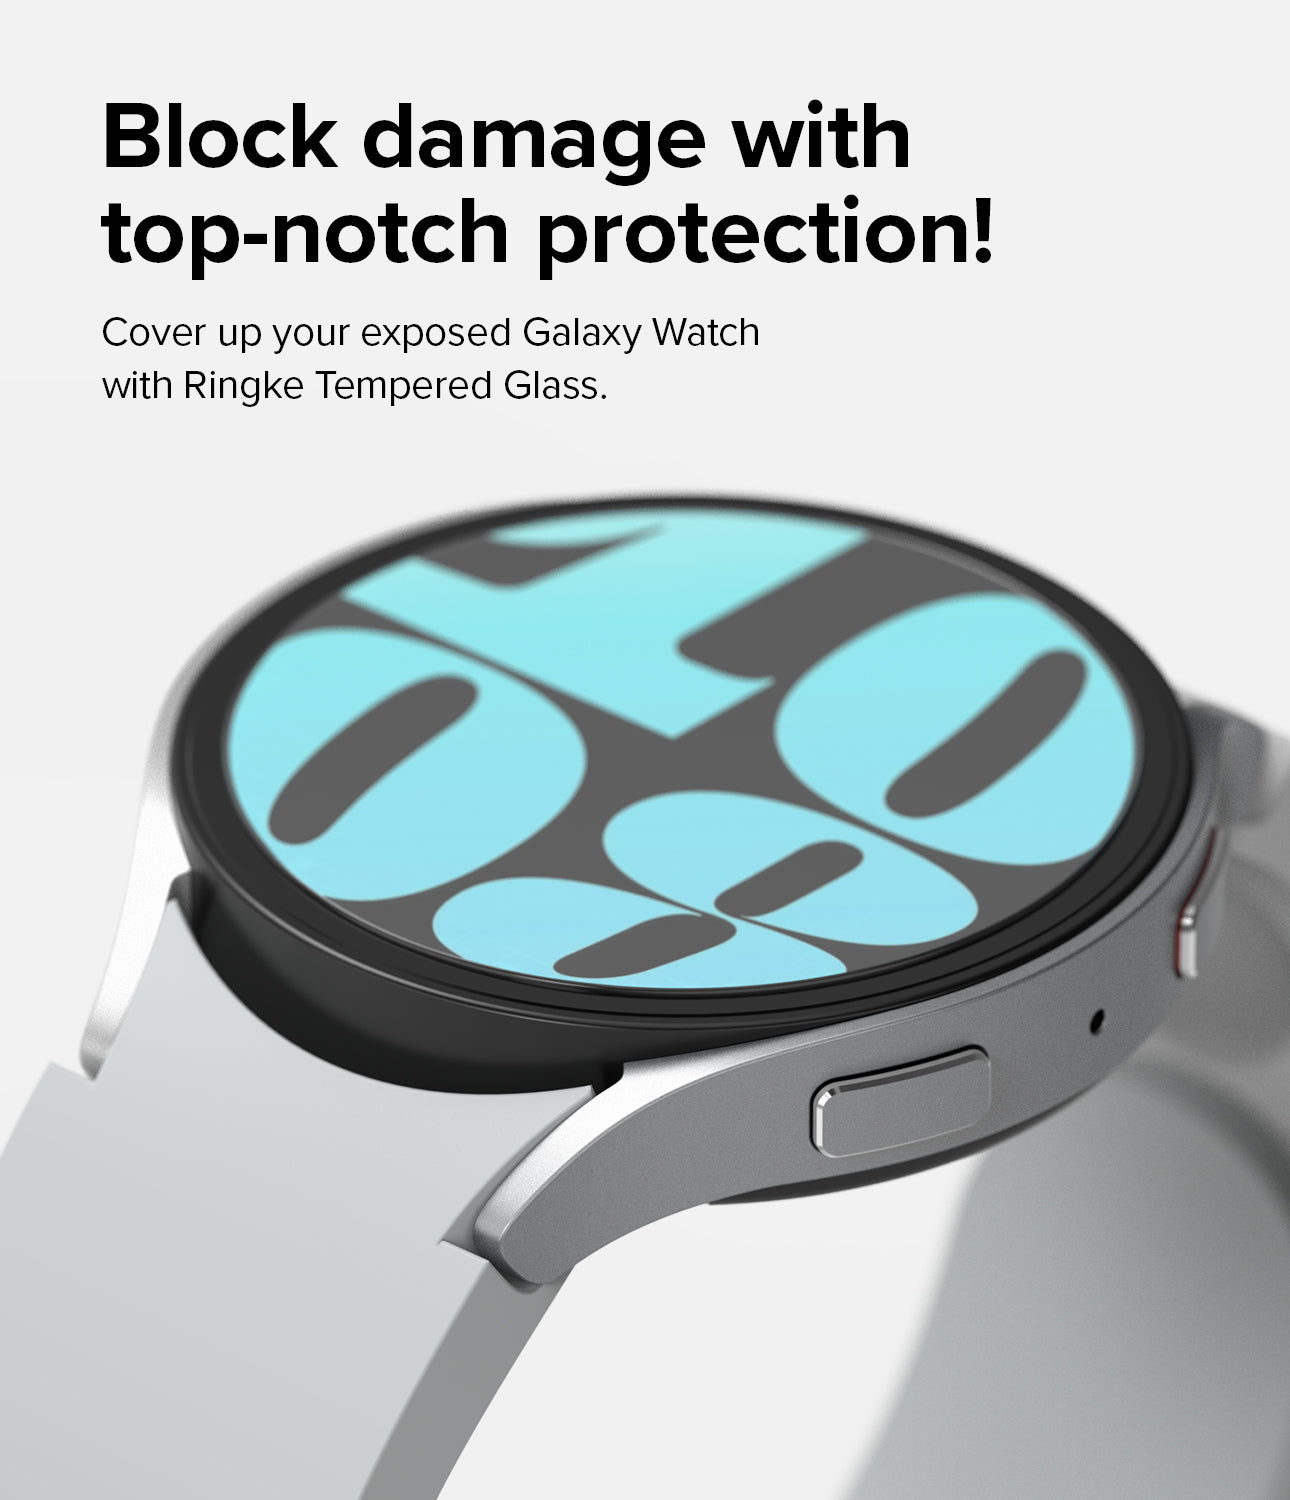 Galaxy Watch 6 40mm Screen Protector | Glass - R4